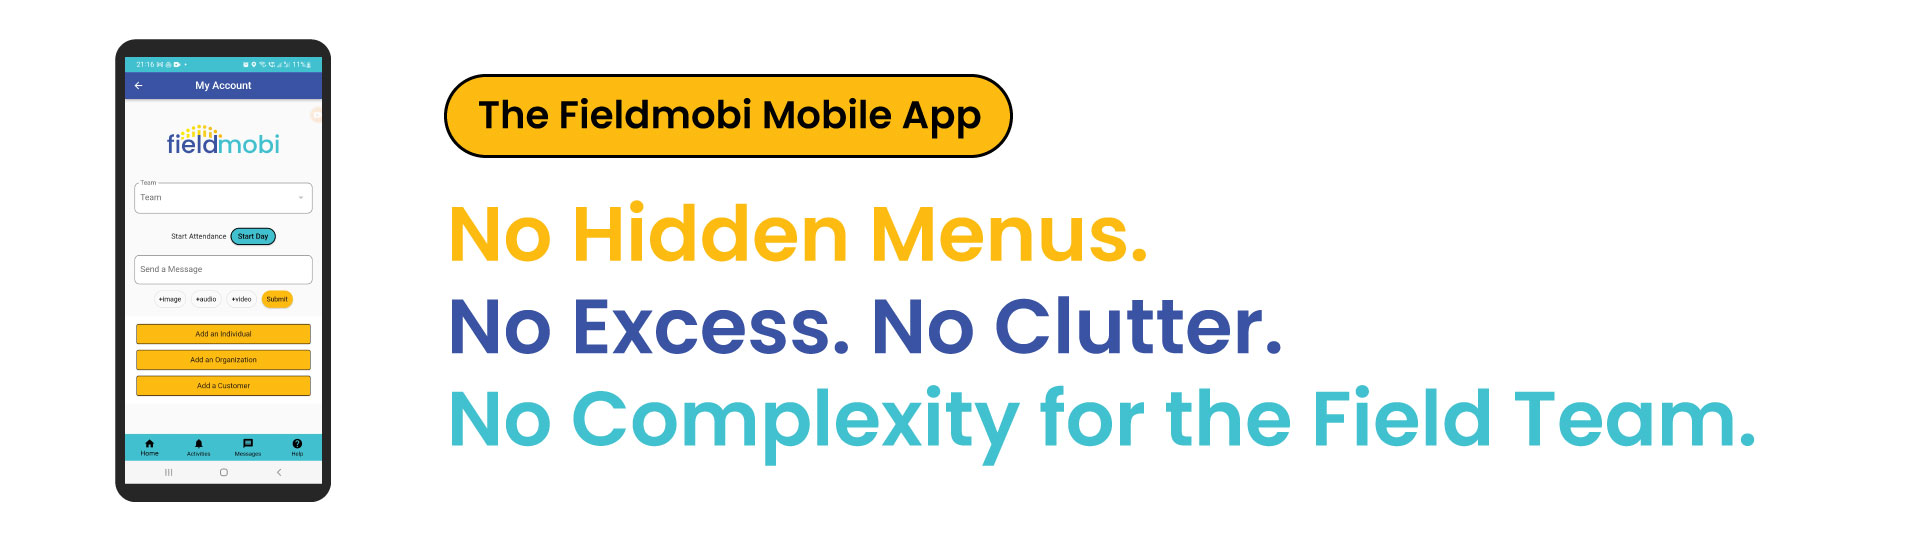 The Fieldmobi Mobile App. No Hidden Menus. No Excess. No Clutter.No Complexity for the Field Team.